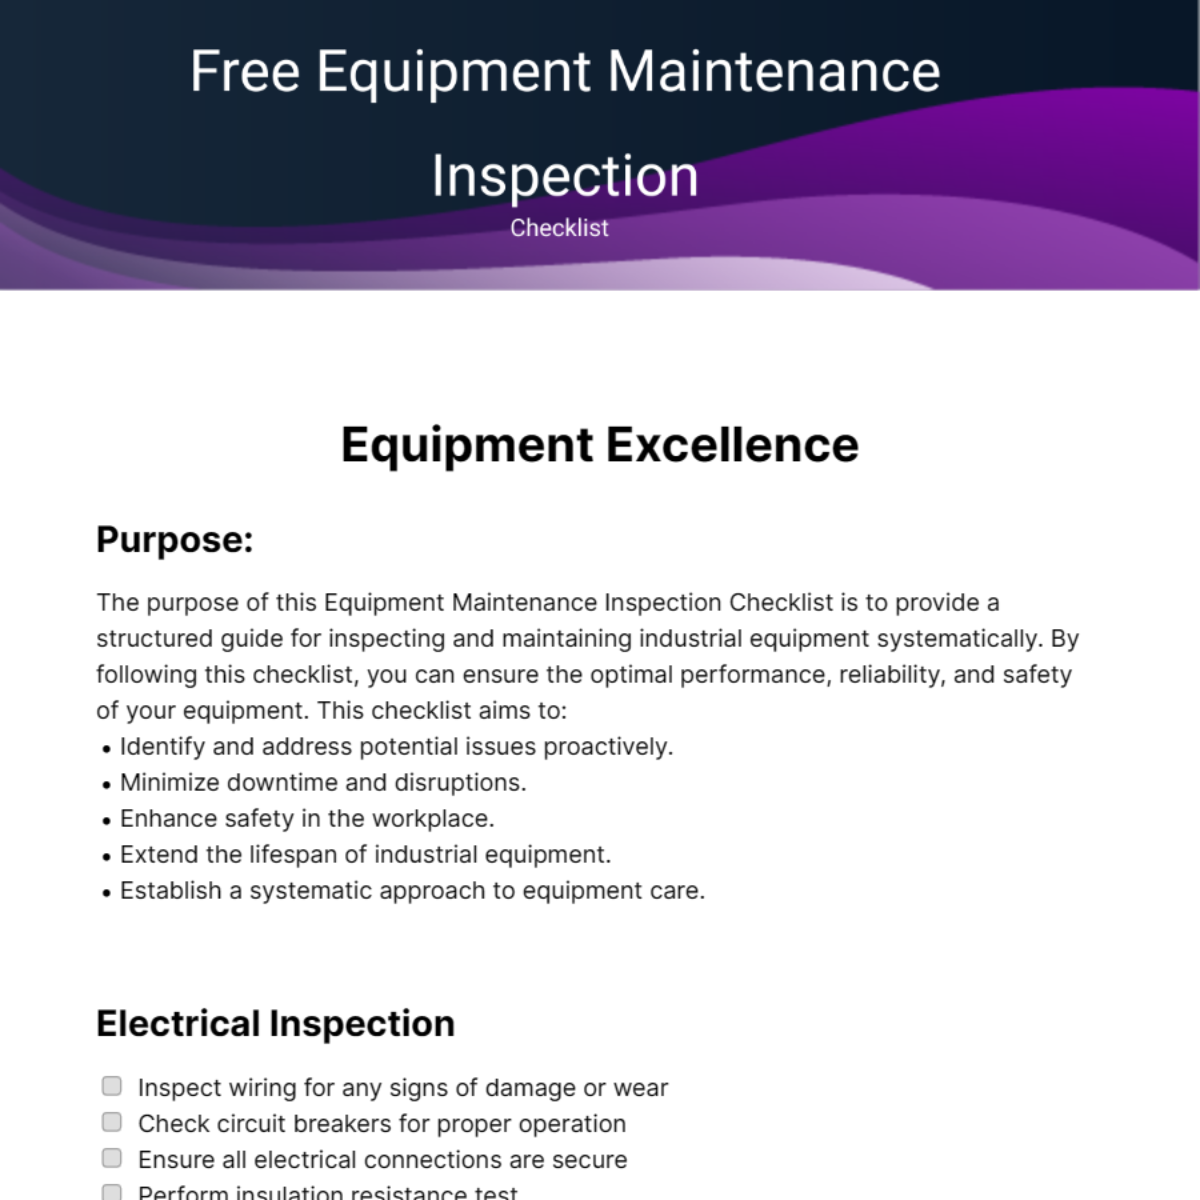 Equipment Maintenance Inspection Checklist Template